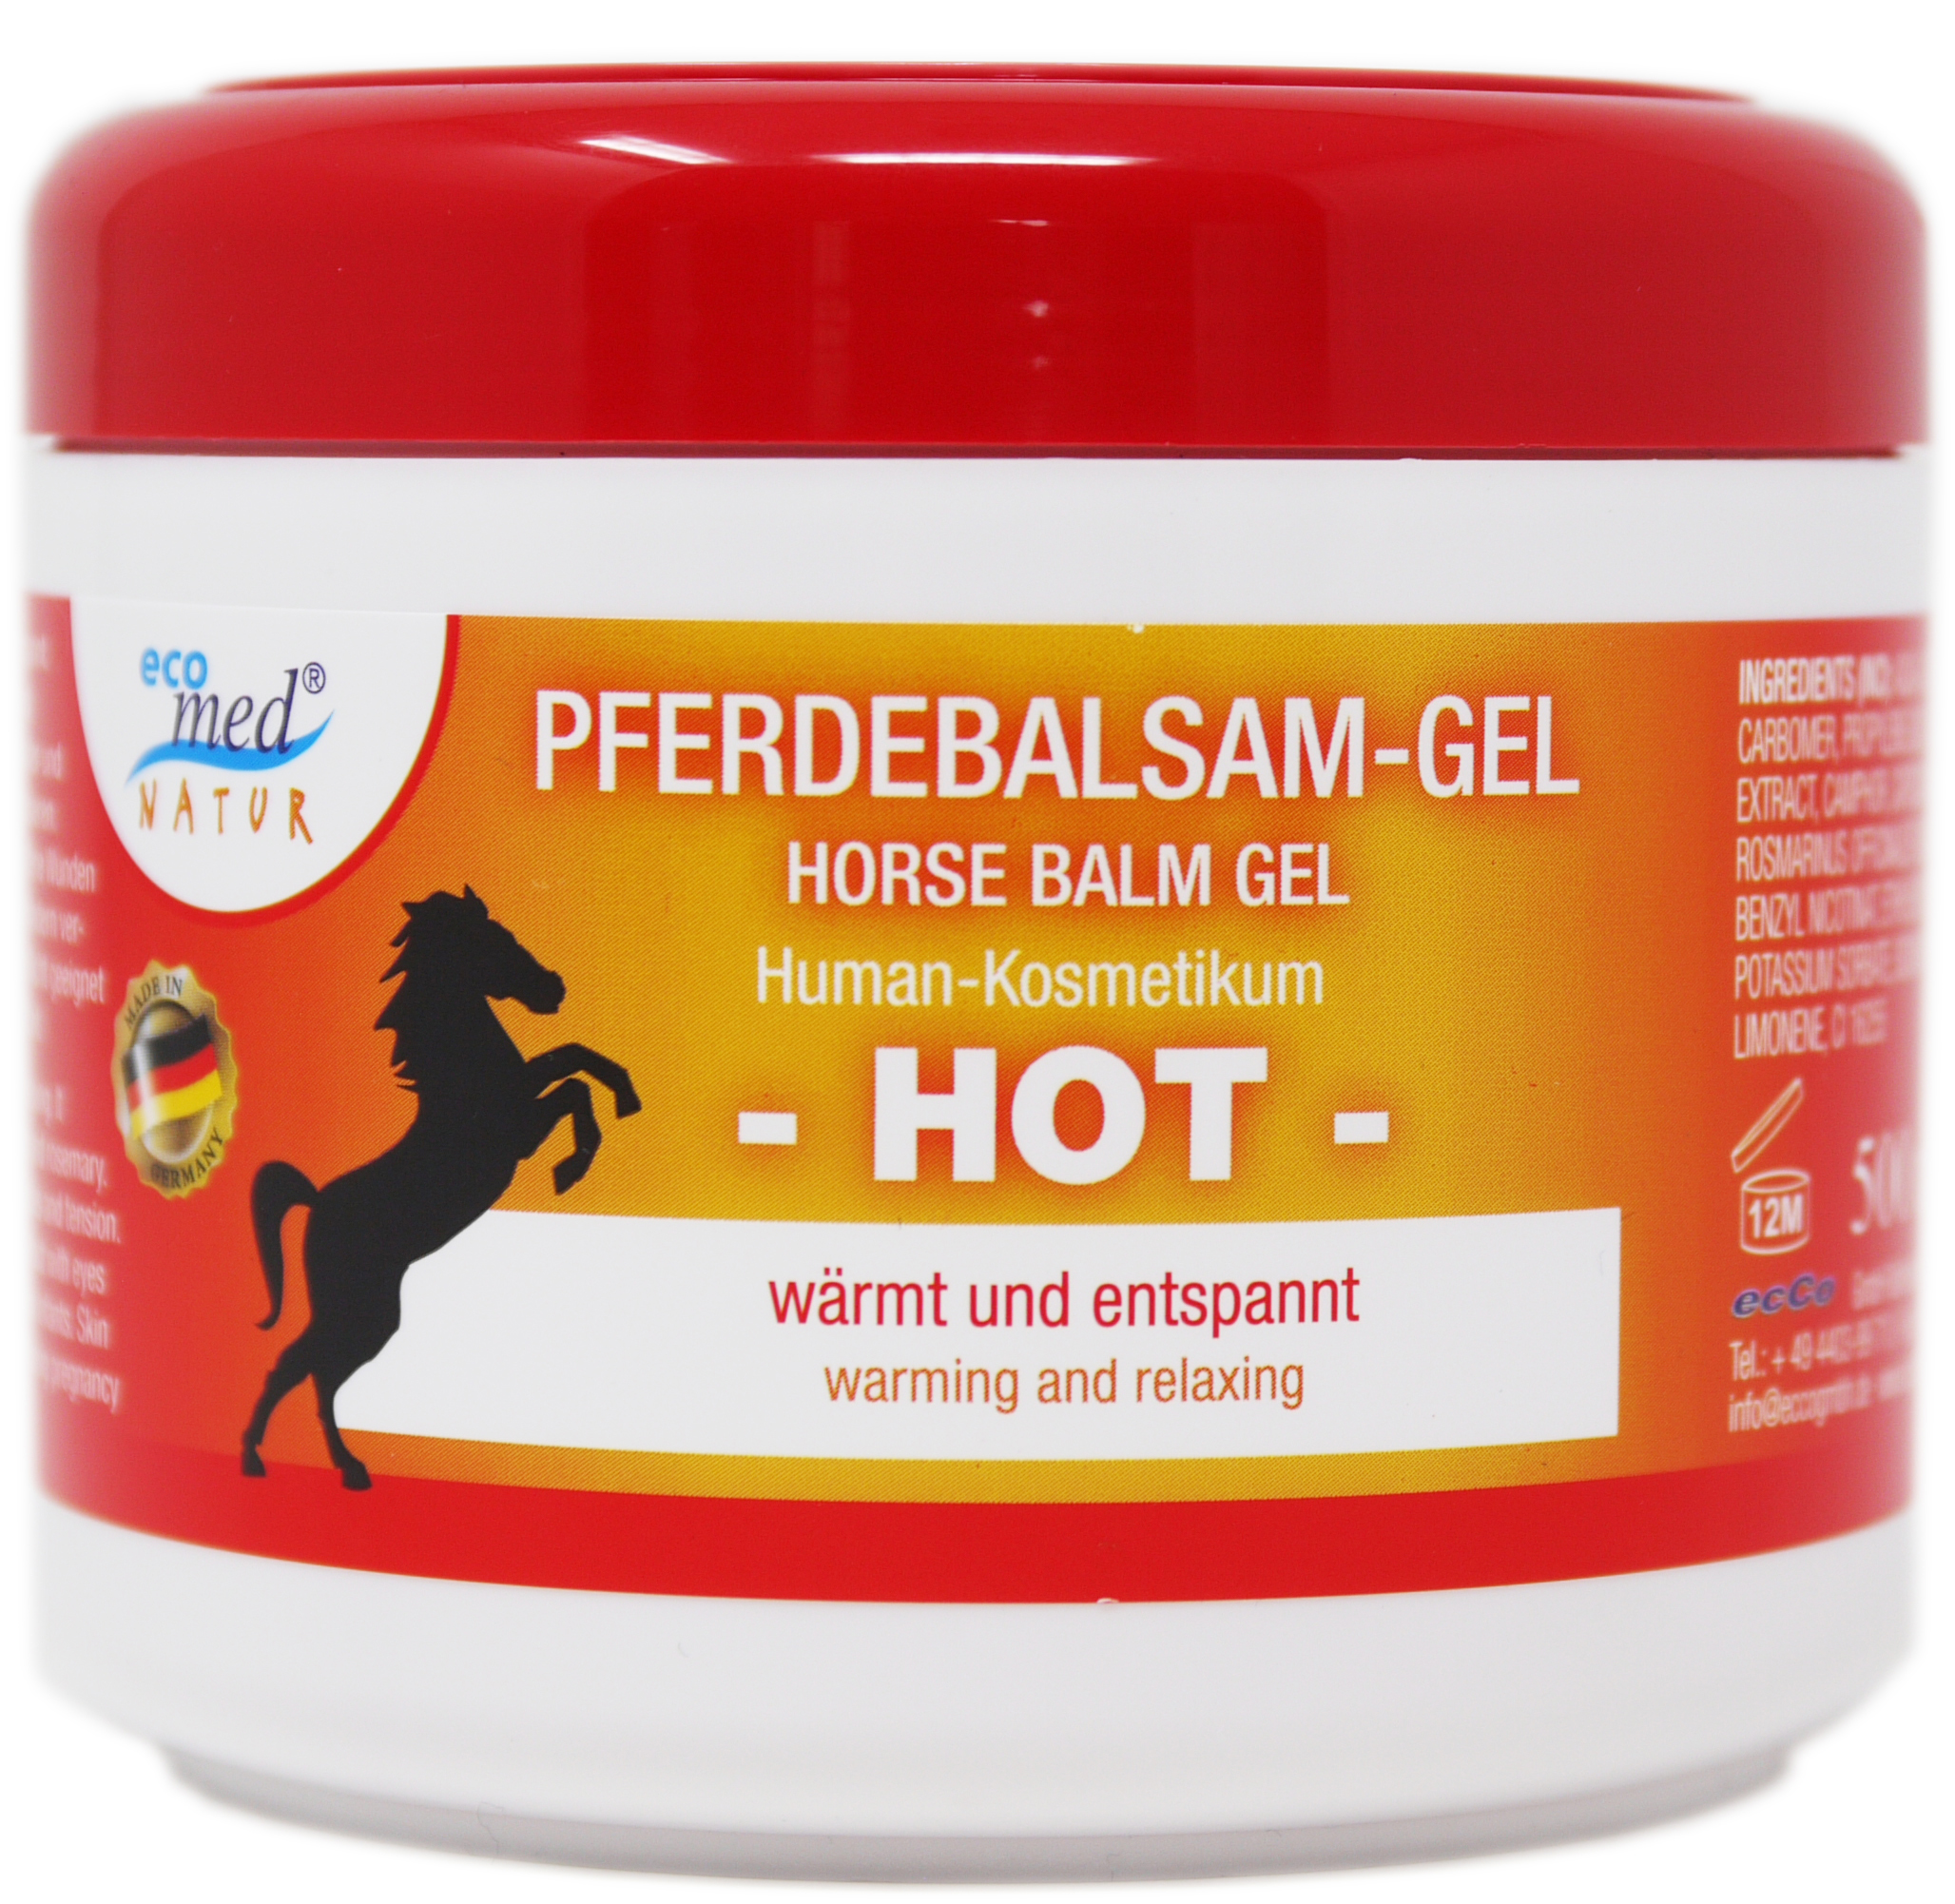 01852 - horse balm gel 500 ml - hot